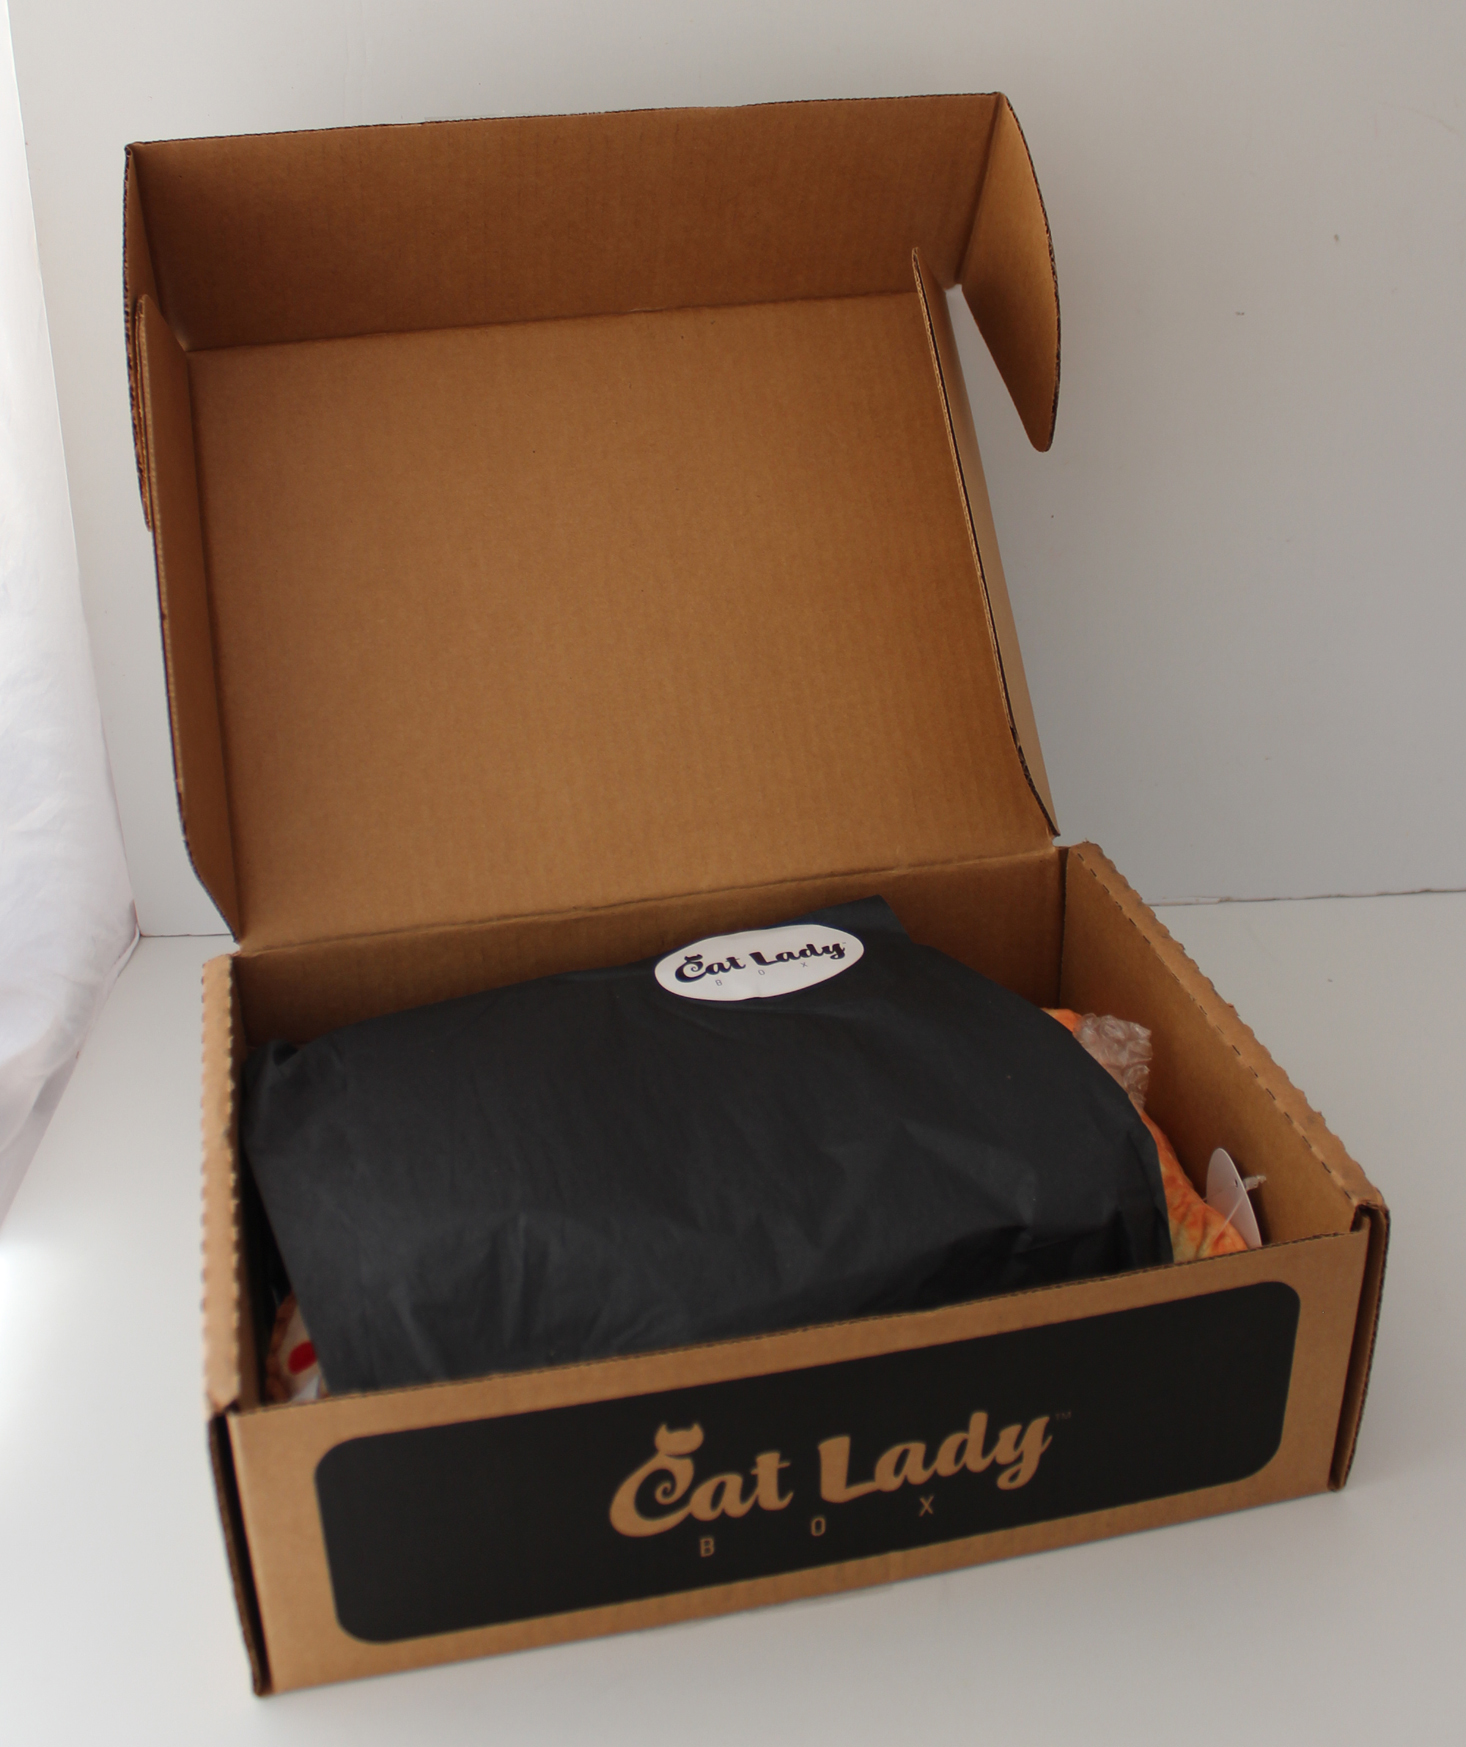 Cat Lady Box November 2019 Inside